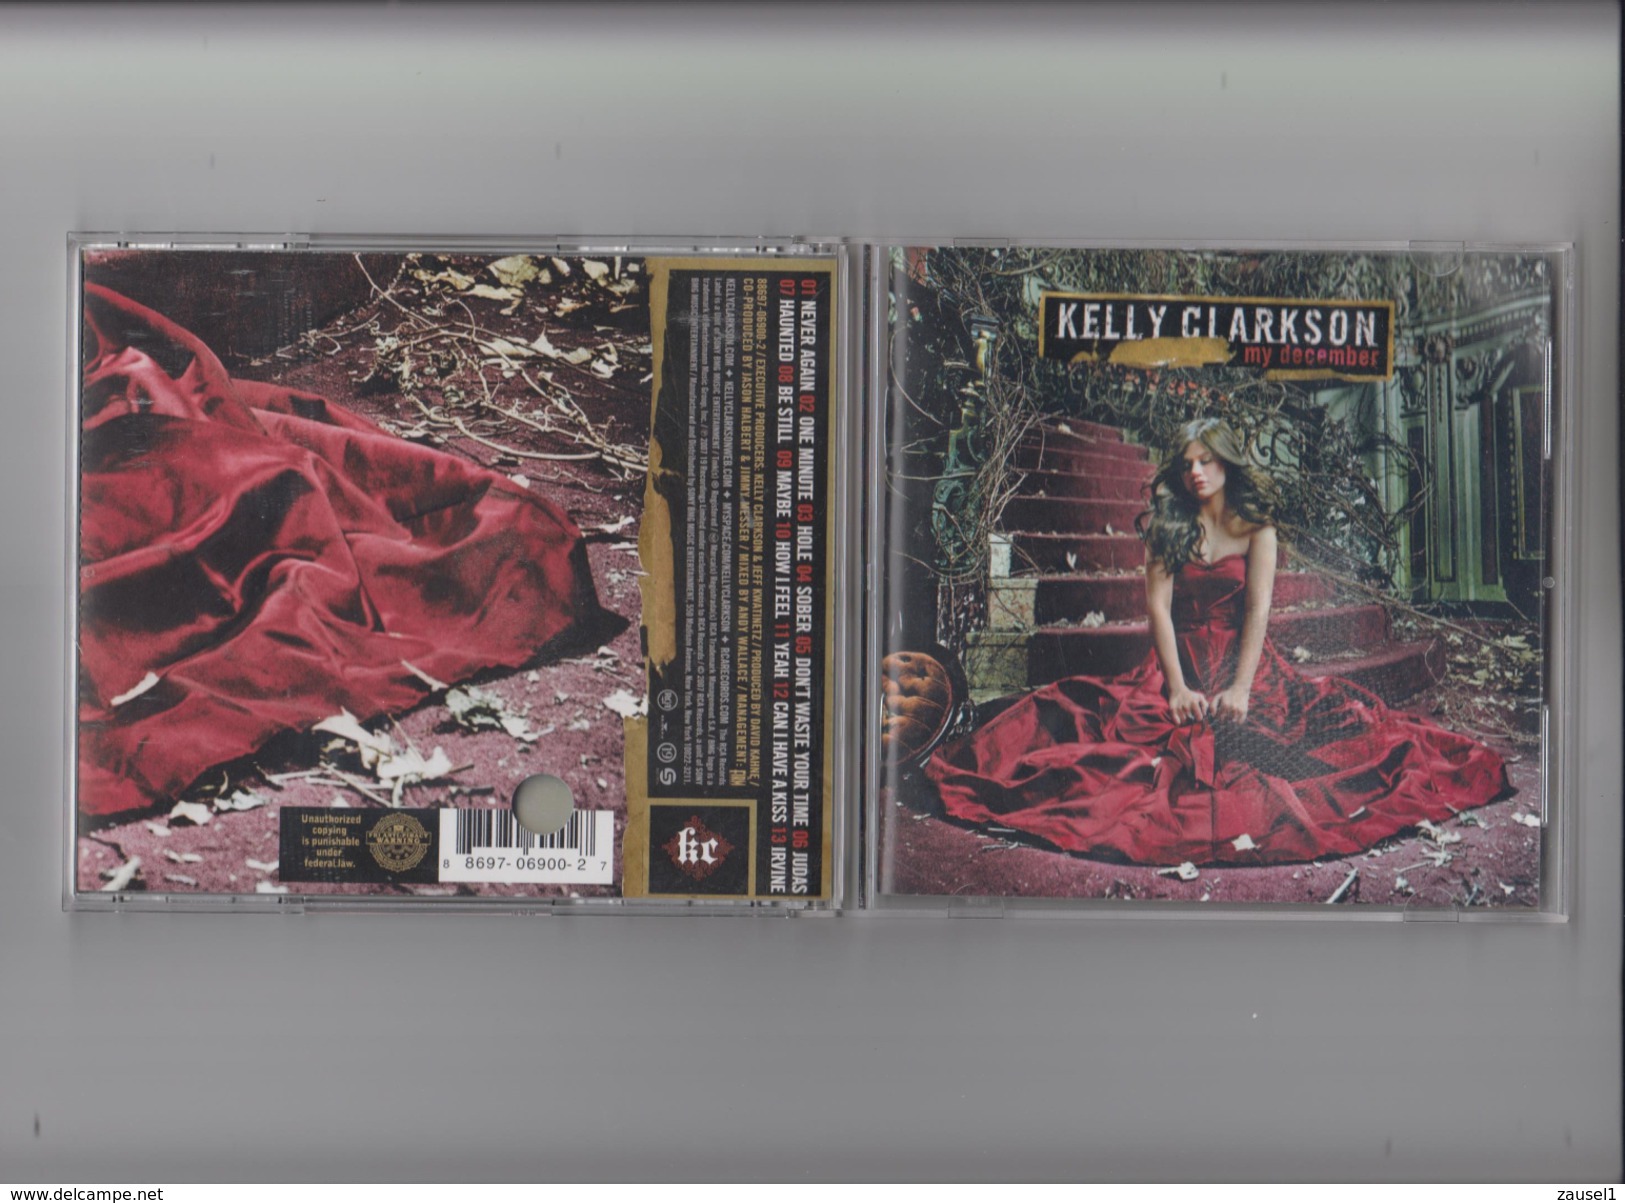 Kelly Clarkson - My December - Original CD - Country & Folk